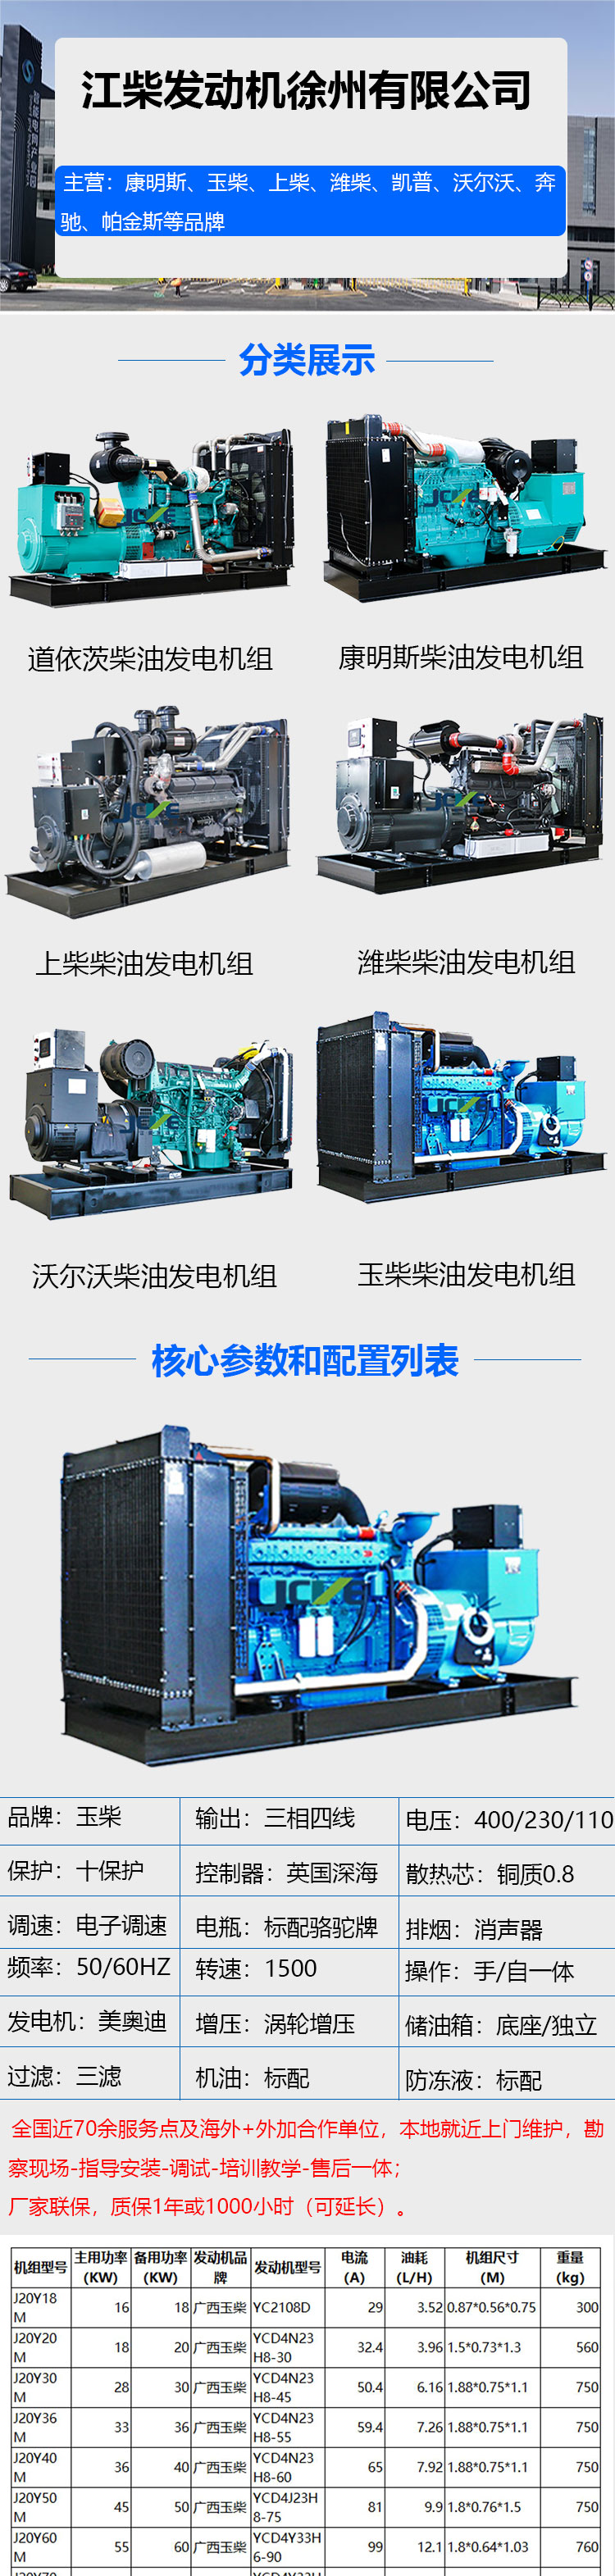 800KW Yuchai generator set manufacturer, breeding farm, factory community backup power station